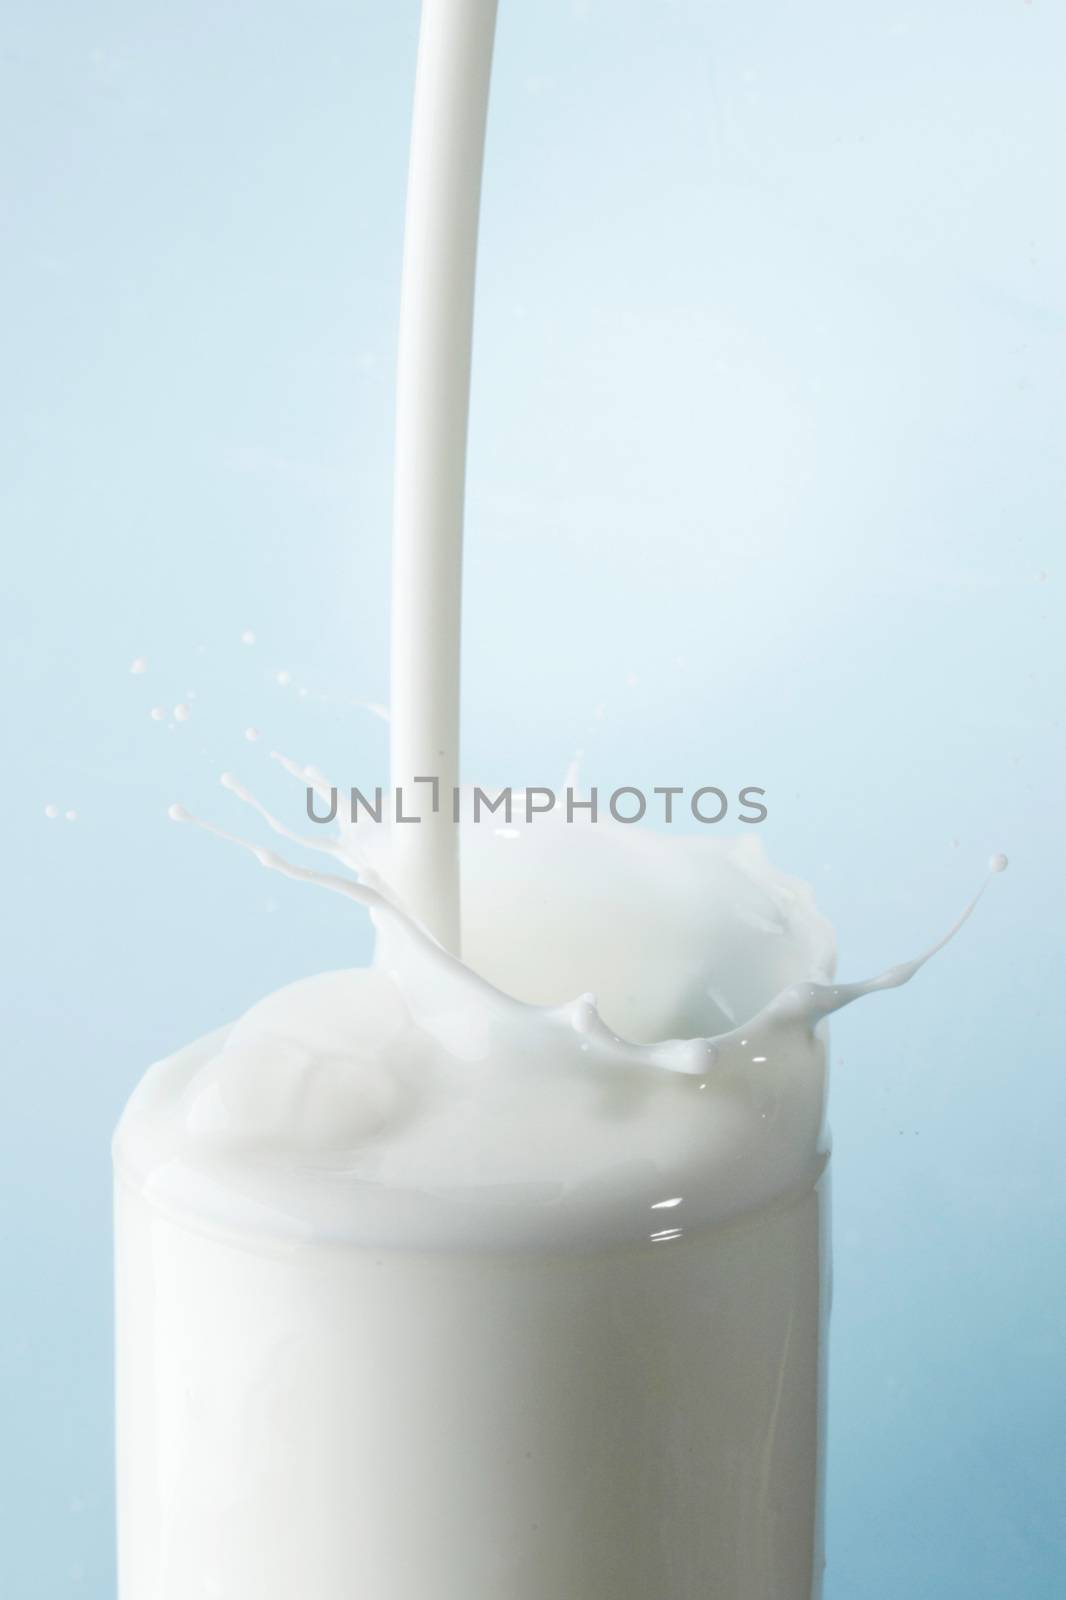 Splash of milk in glass by Yellowj